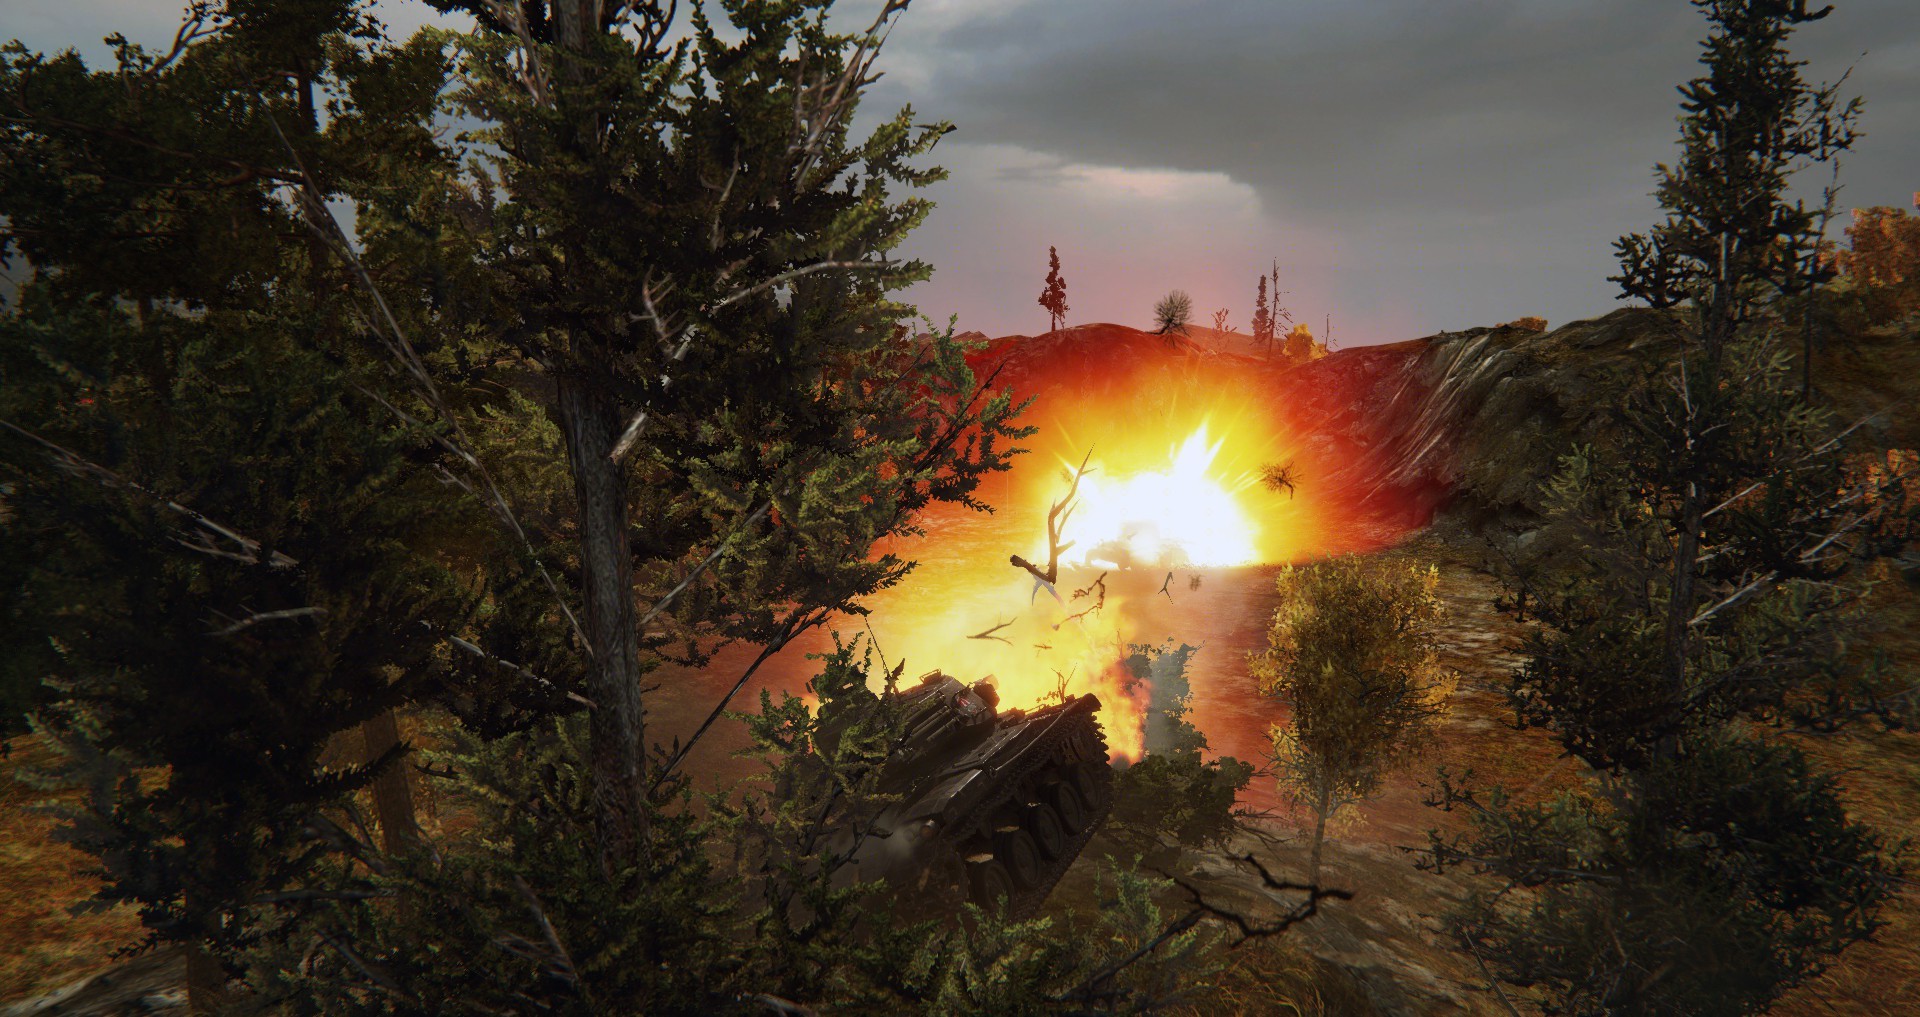 world of tanks m41 walker bulldog explosion video games screen shot Wallpaper